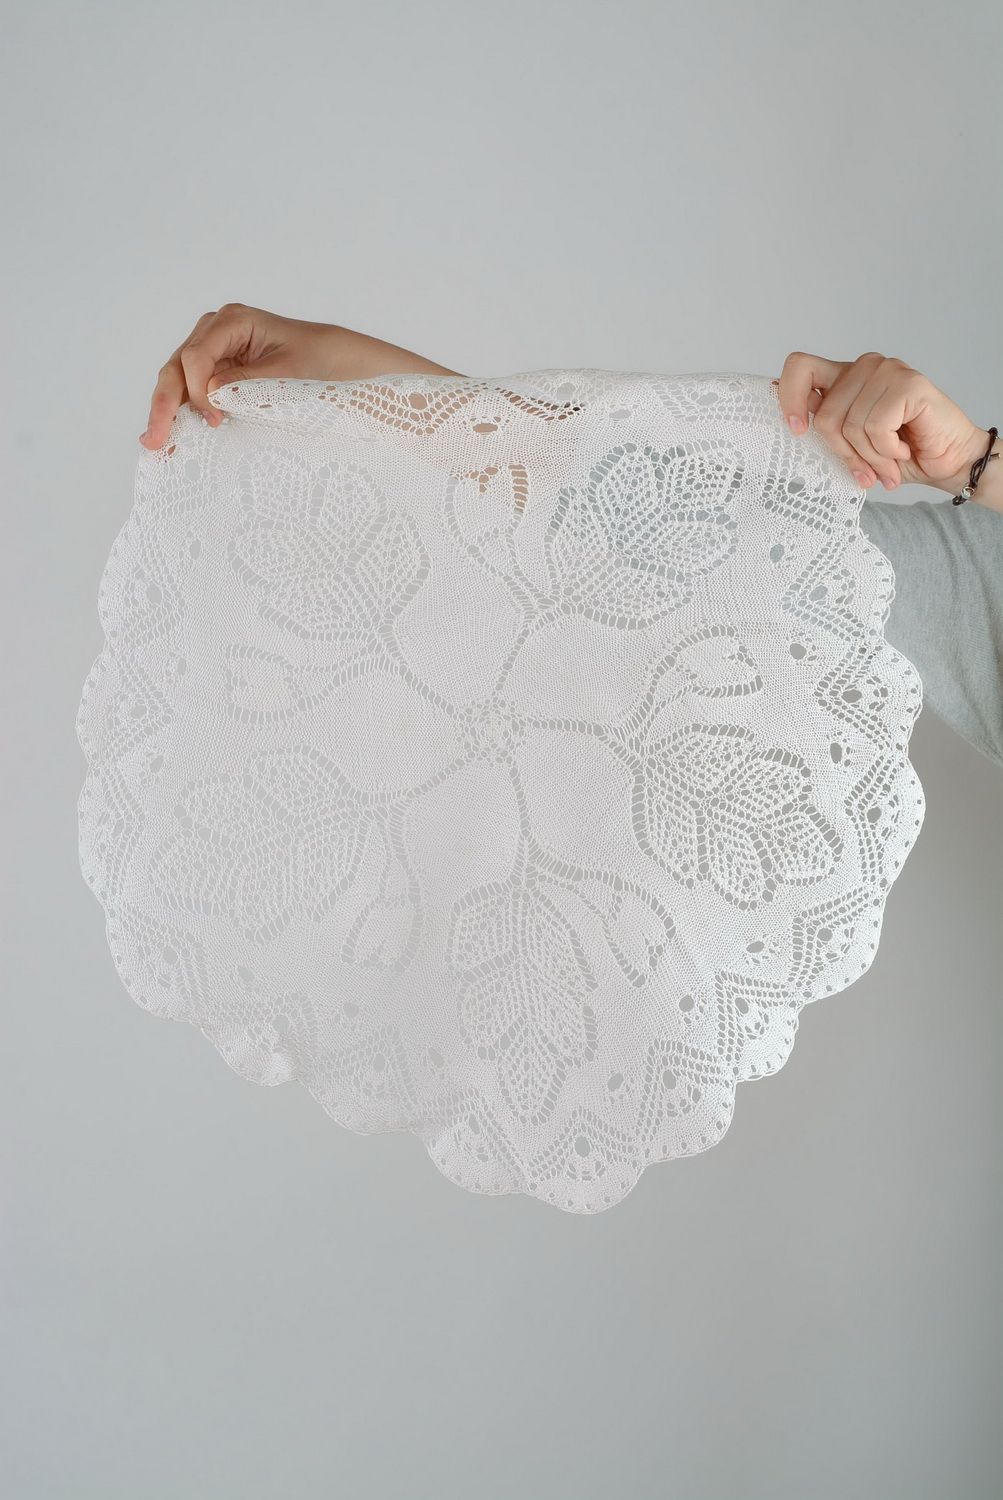 Decorative crocheted napkin photo 5